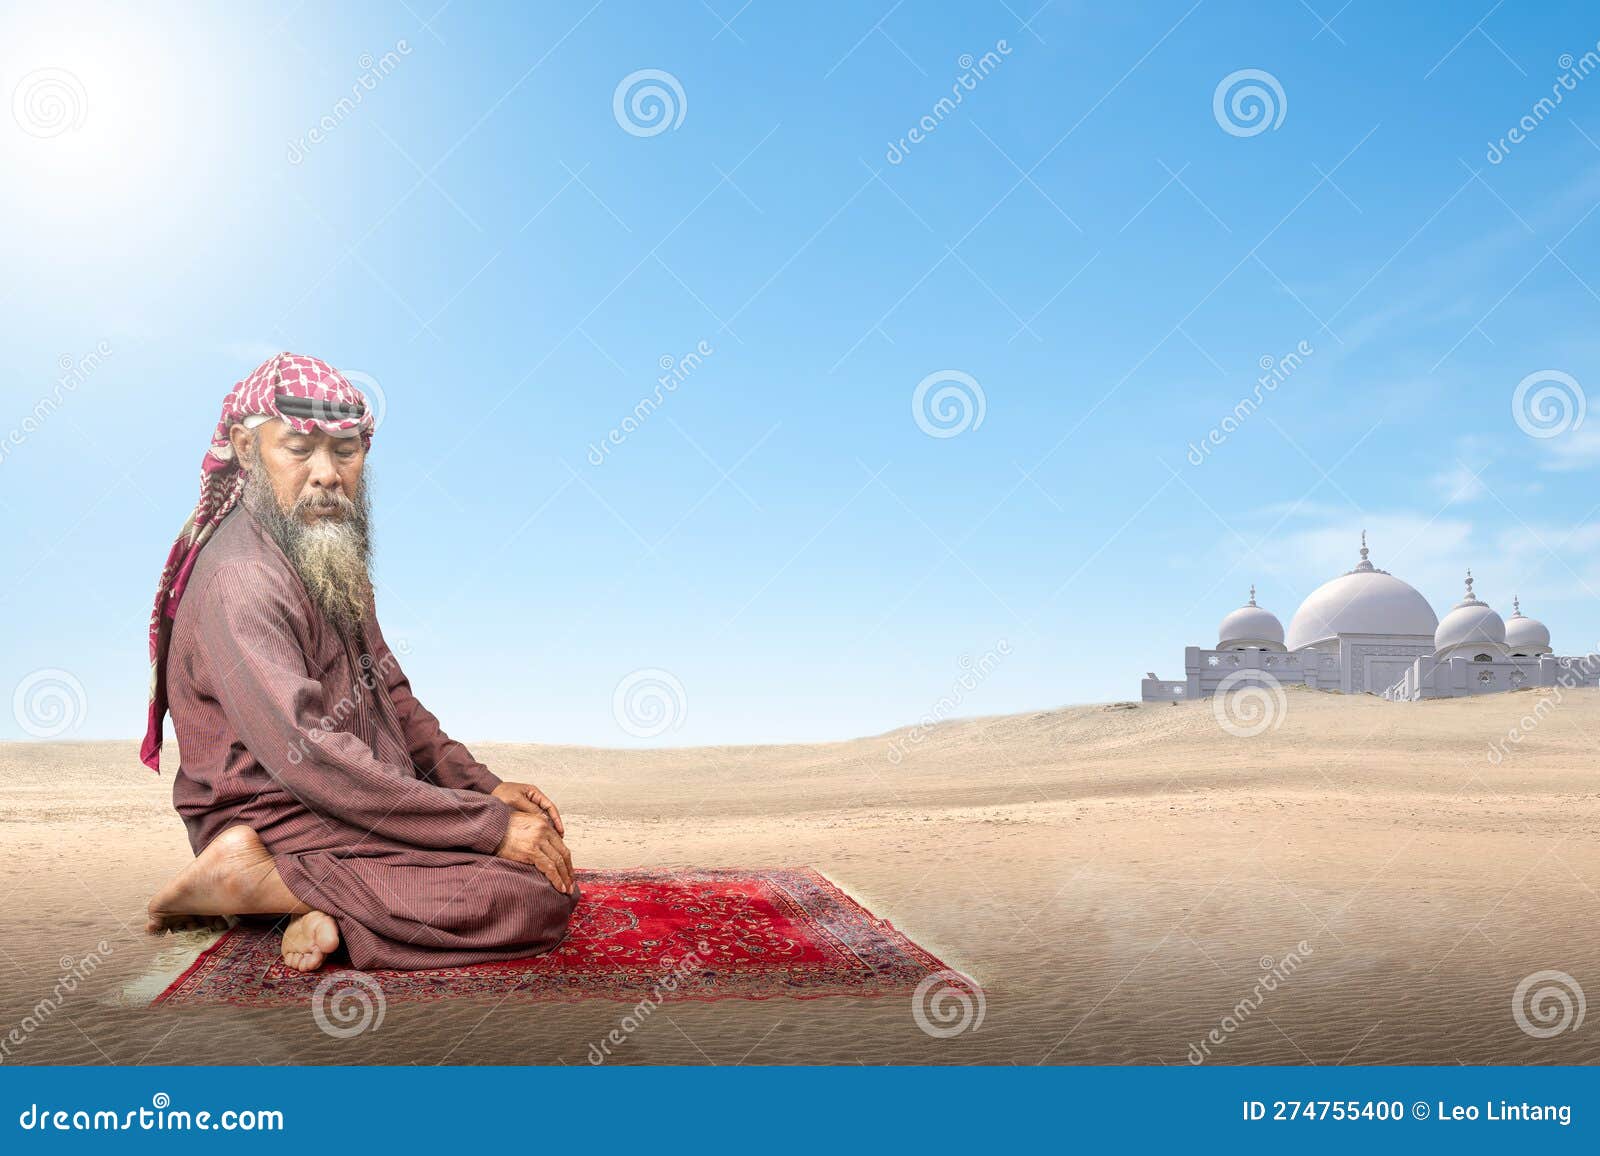 muslim man with a beard wearing keffiyeh with agal in praying position (salat) on the prayer rug